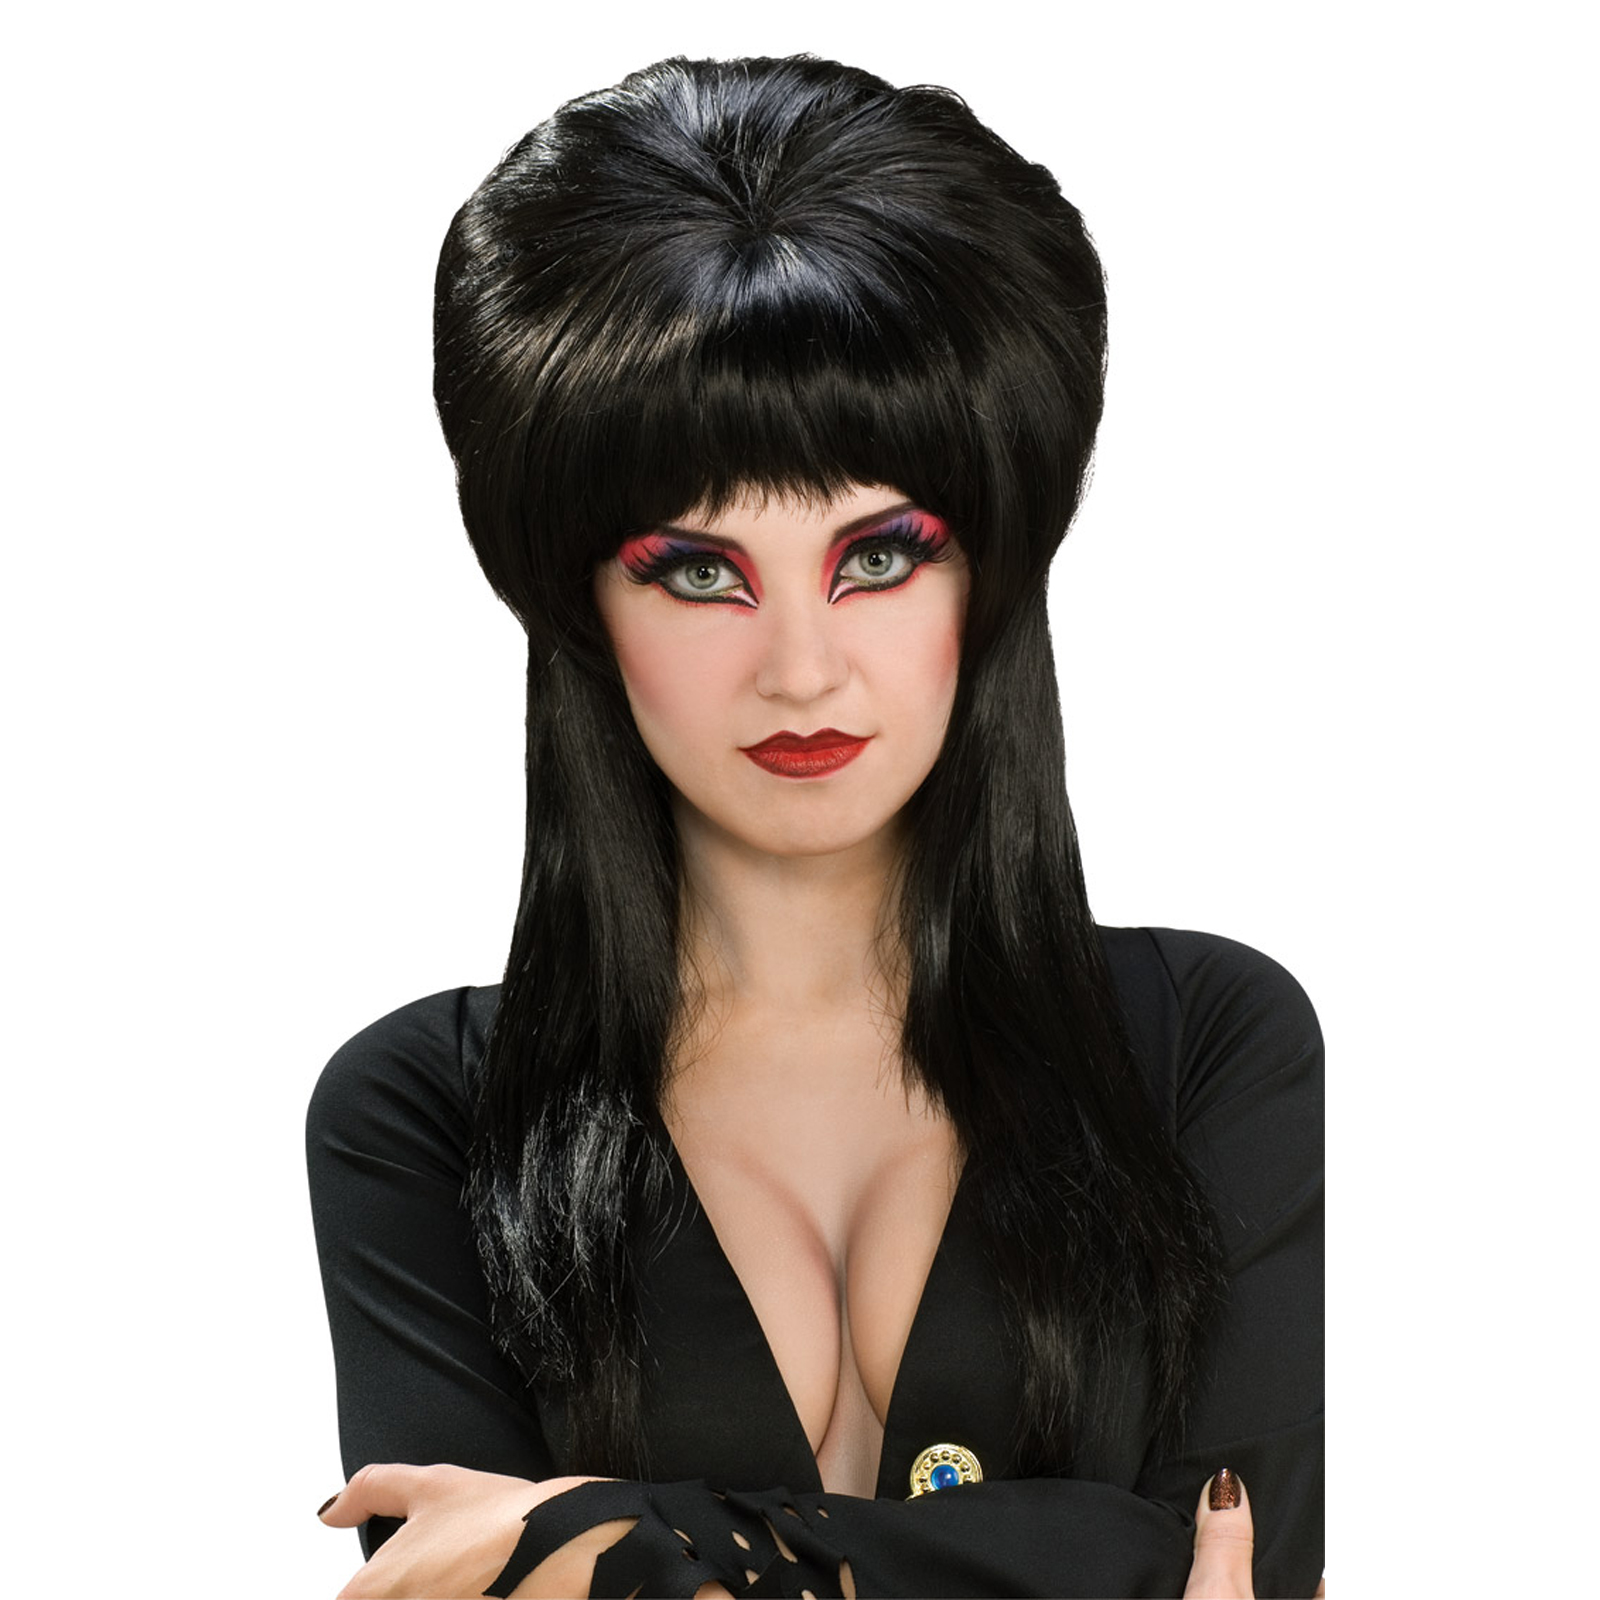 Rubie's Costume Co Women's Elvira Wig - Black - One Size